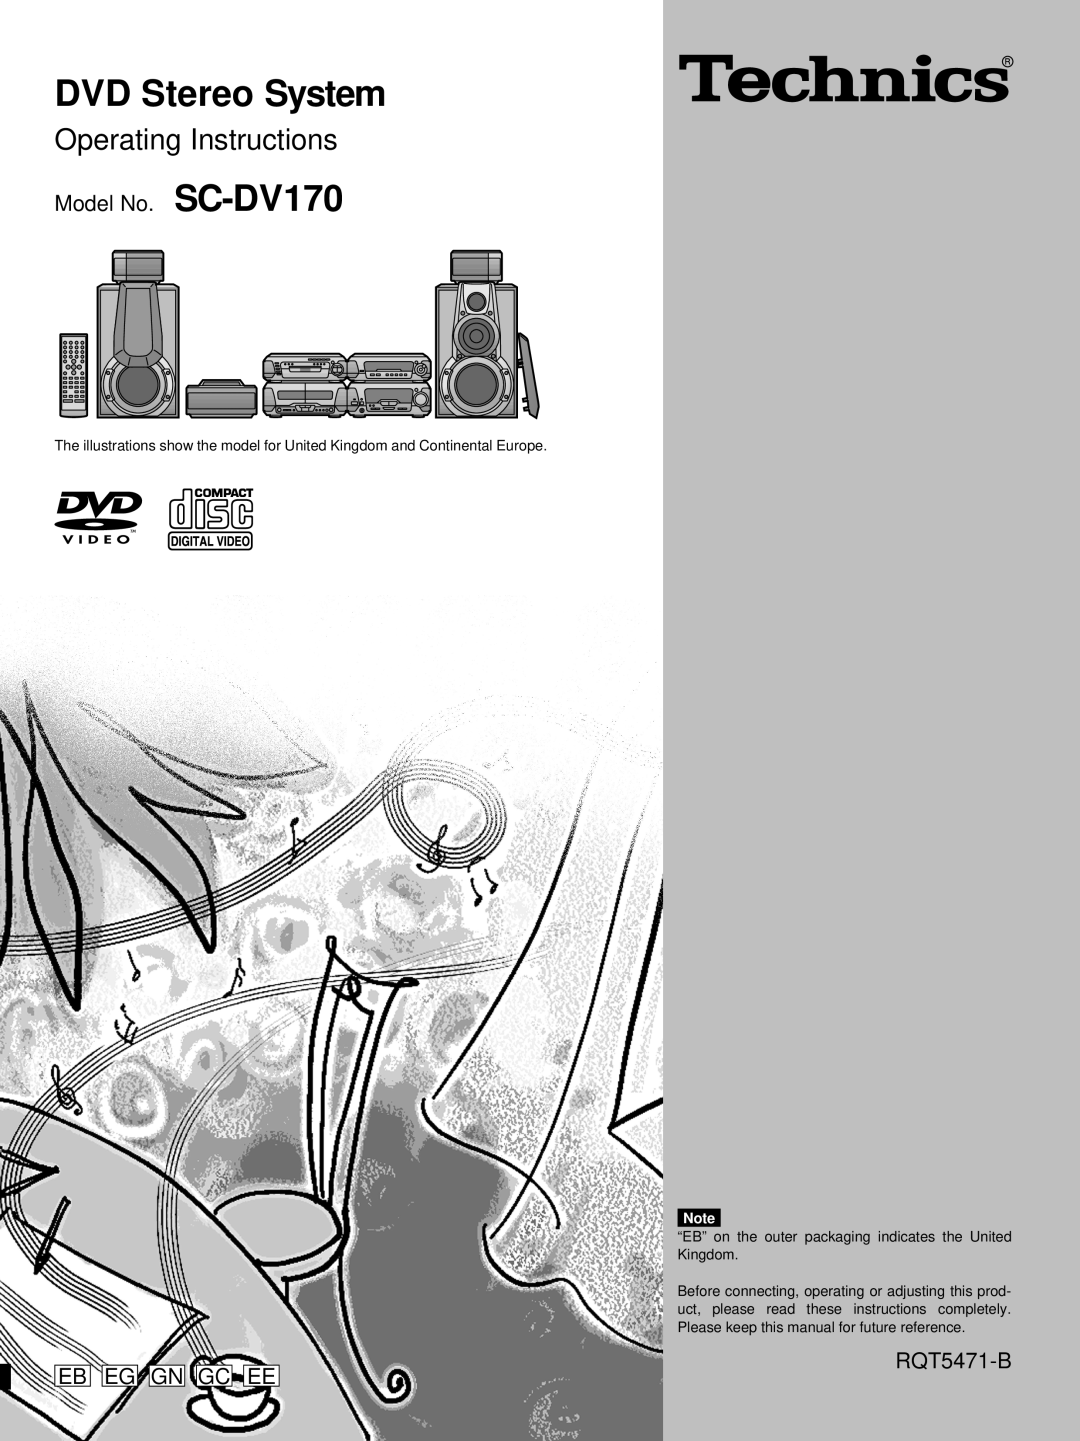 Technics manual Model No. SC-DV170, Eb Eg Gn Gc Ee, RQT5471-B, DVD Stereo System, Operating Instructions 